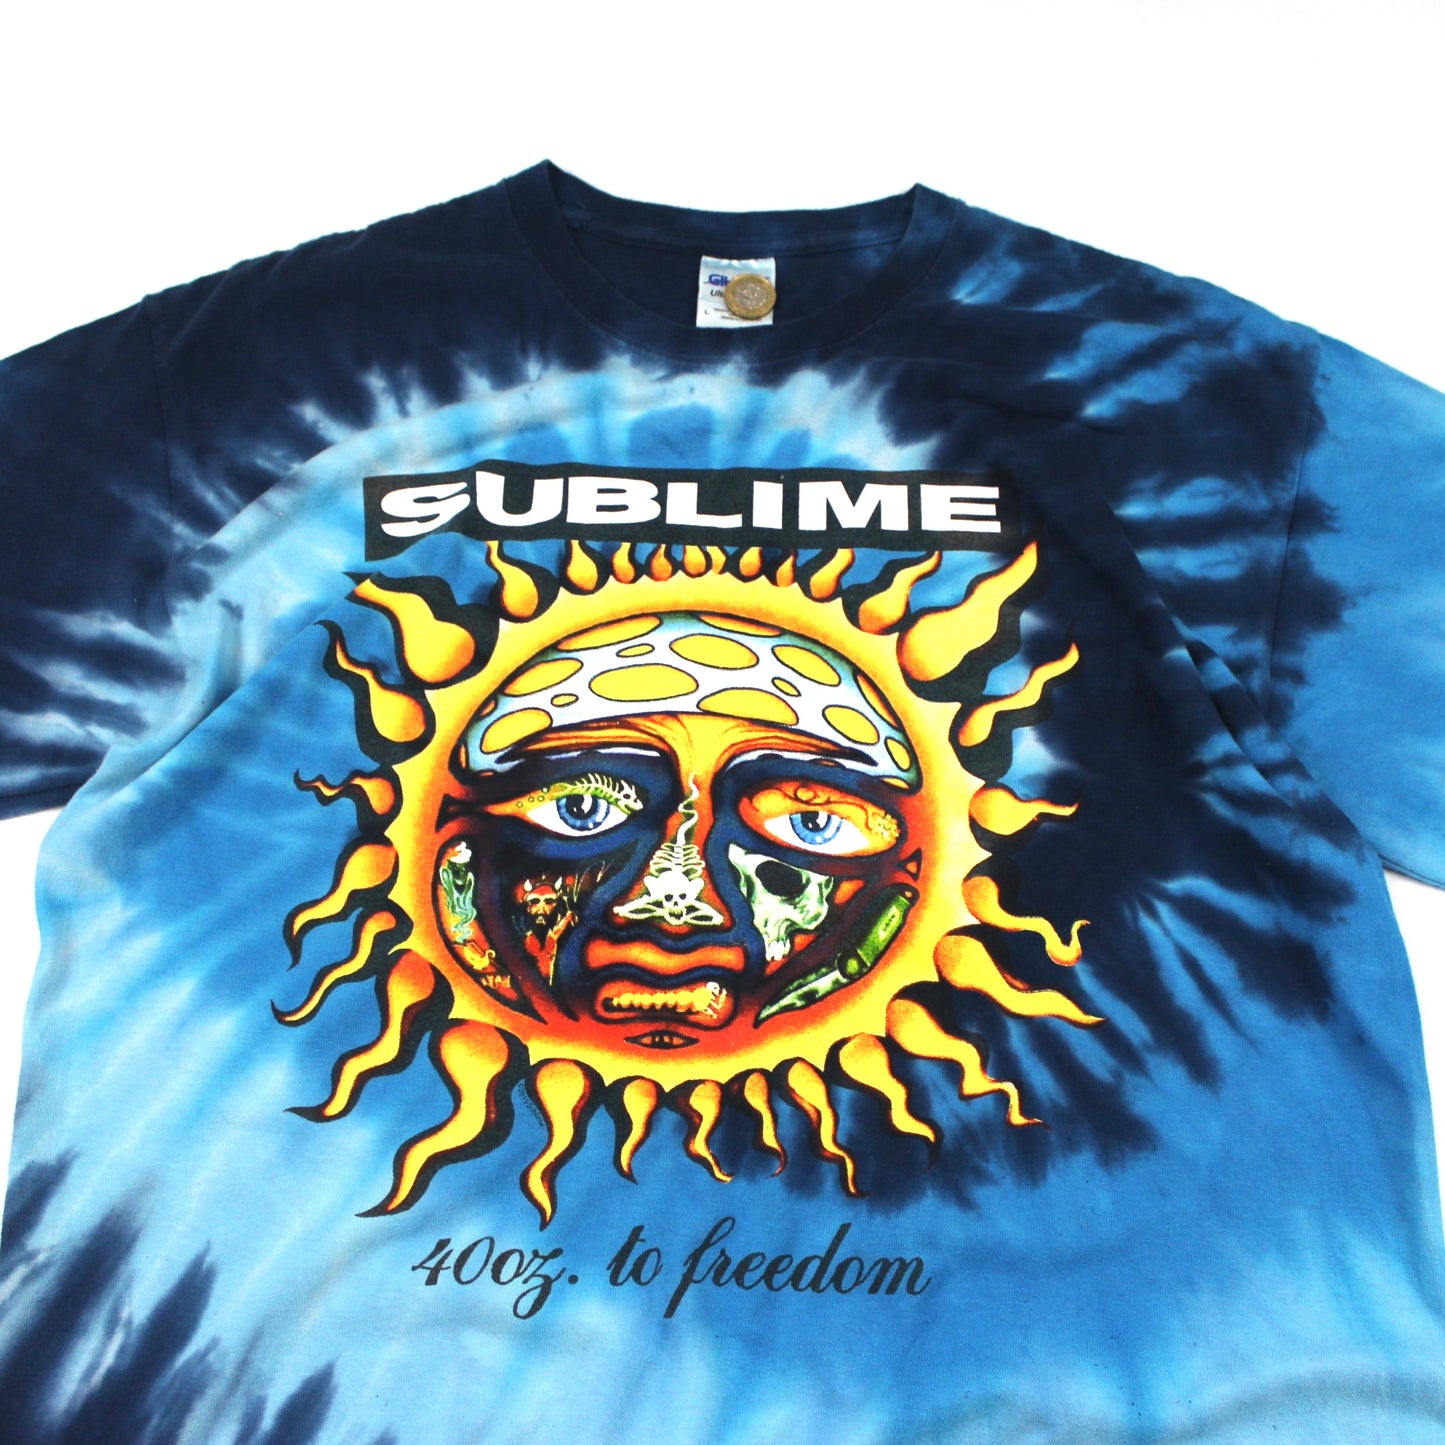 Sublime Blue Tie-Dye T-Shirt, 40oz To Freedom Sun Print (L)